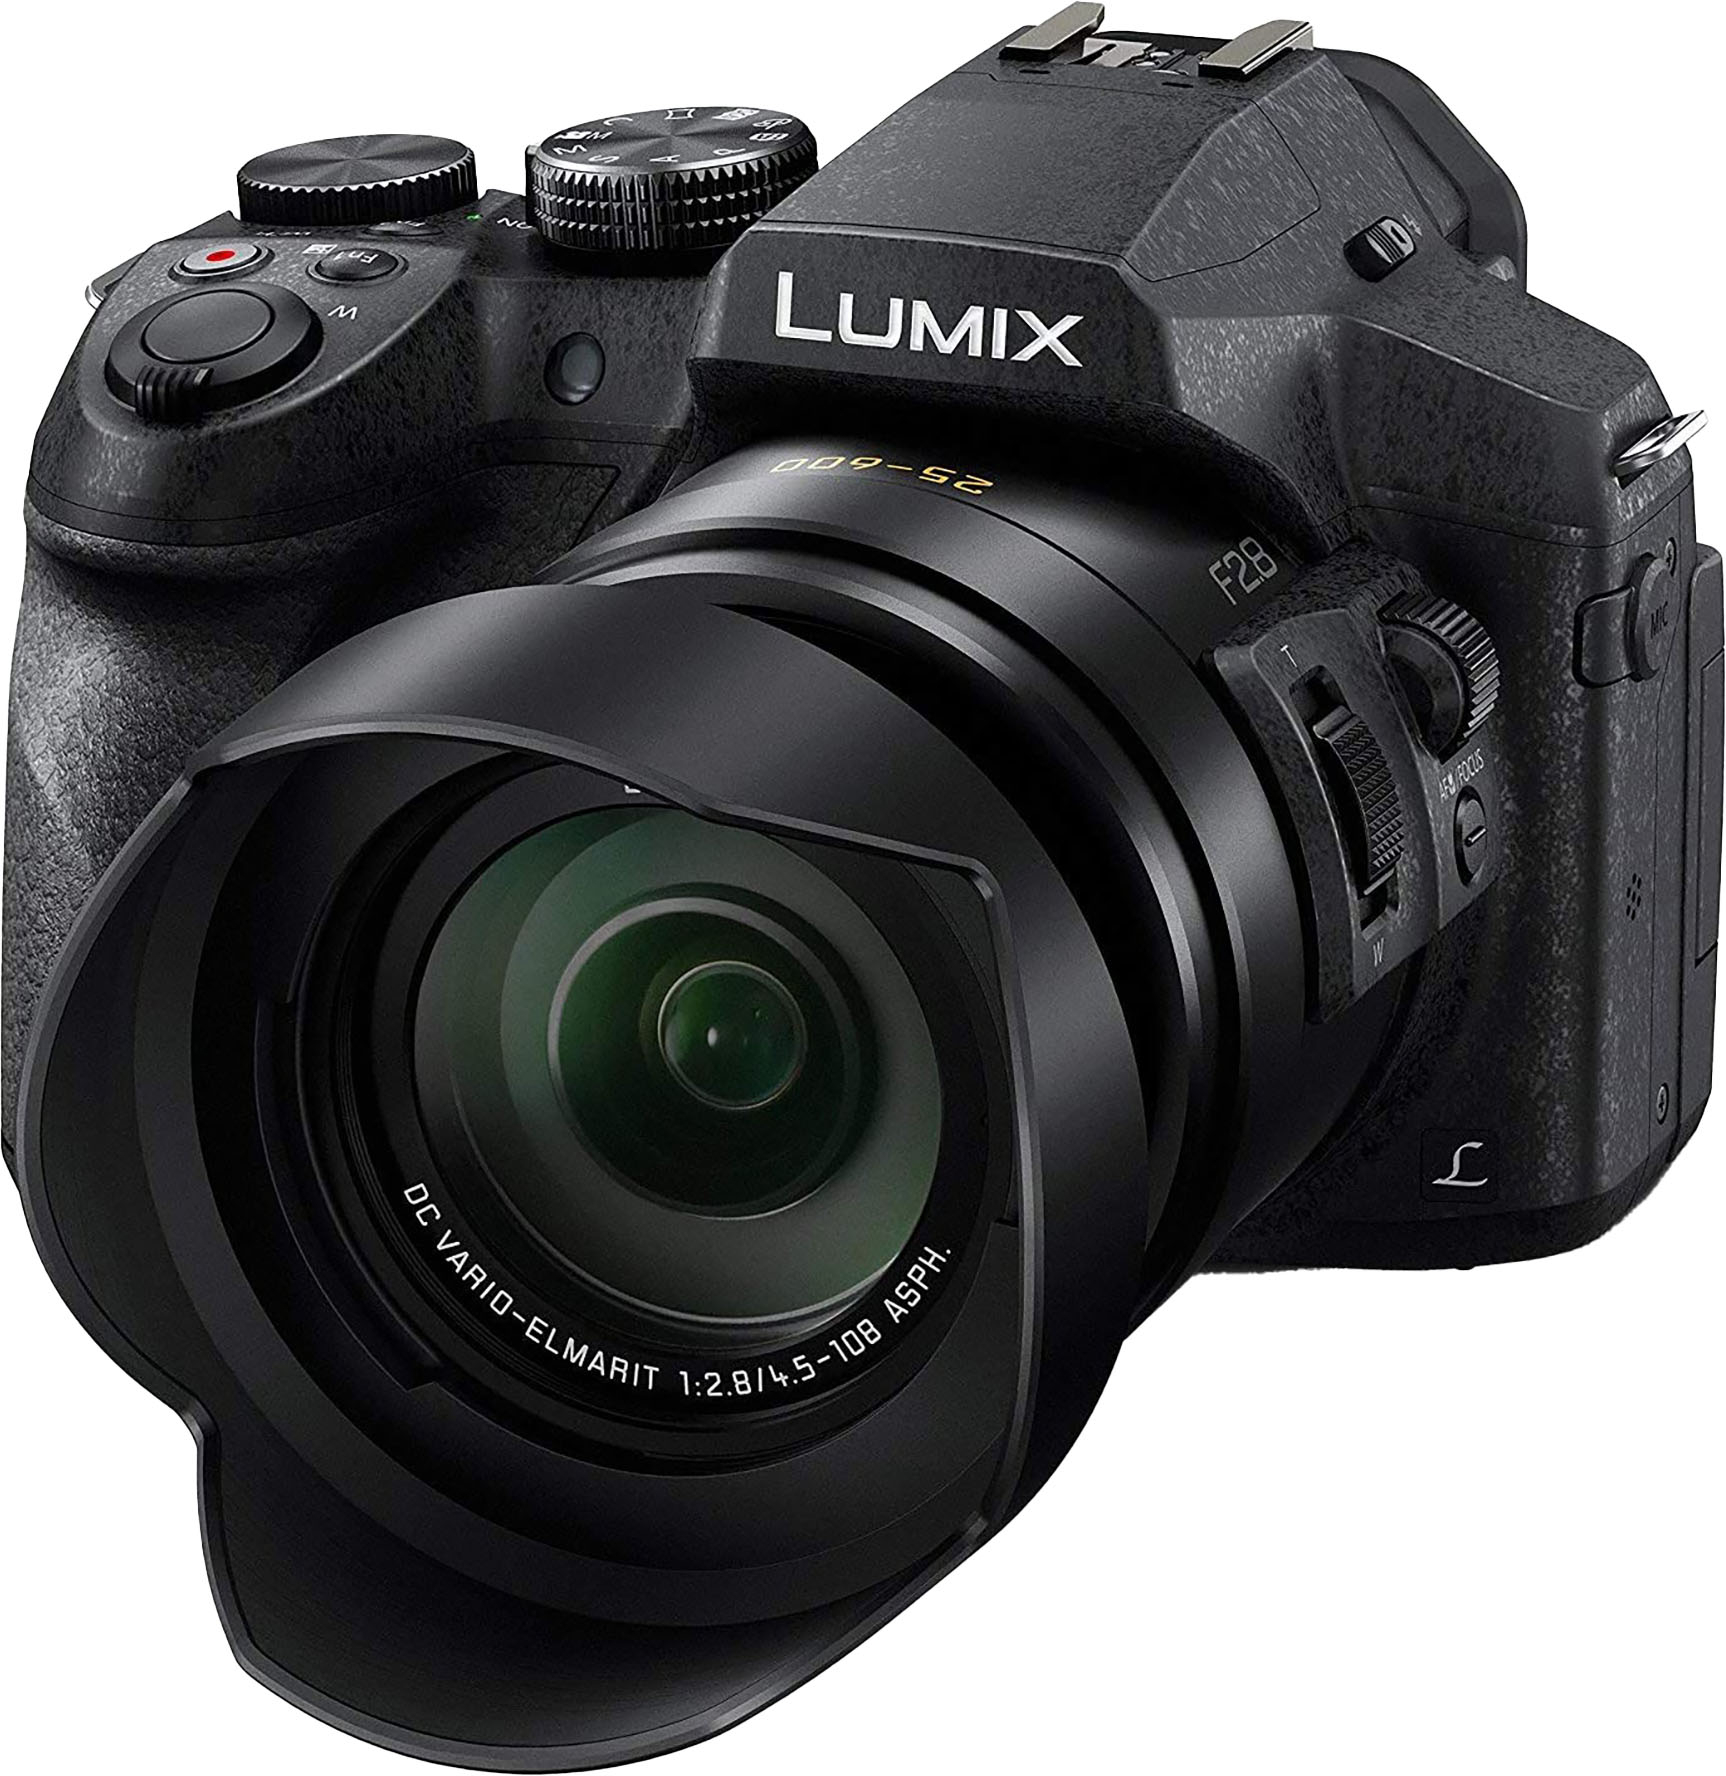 Angle View: Panasonic - Lumix ZS200DK 20.1-Megapixel Digital Camera with 15X LEICA DC VARIO-ELMAR Lens - Black